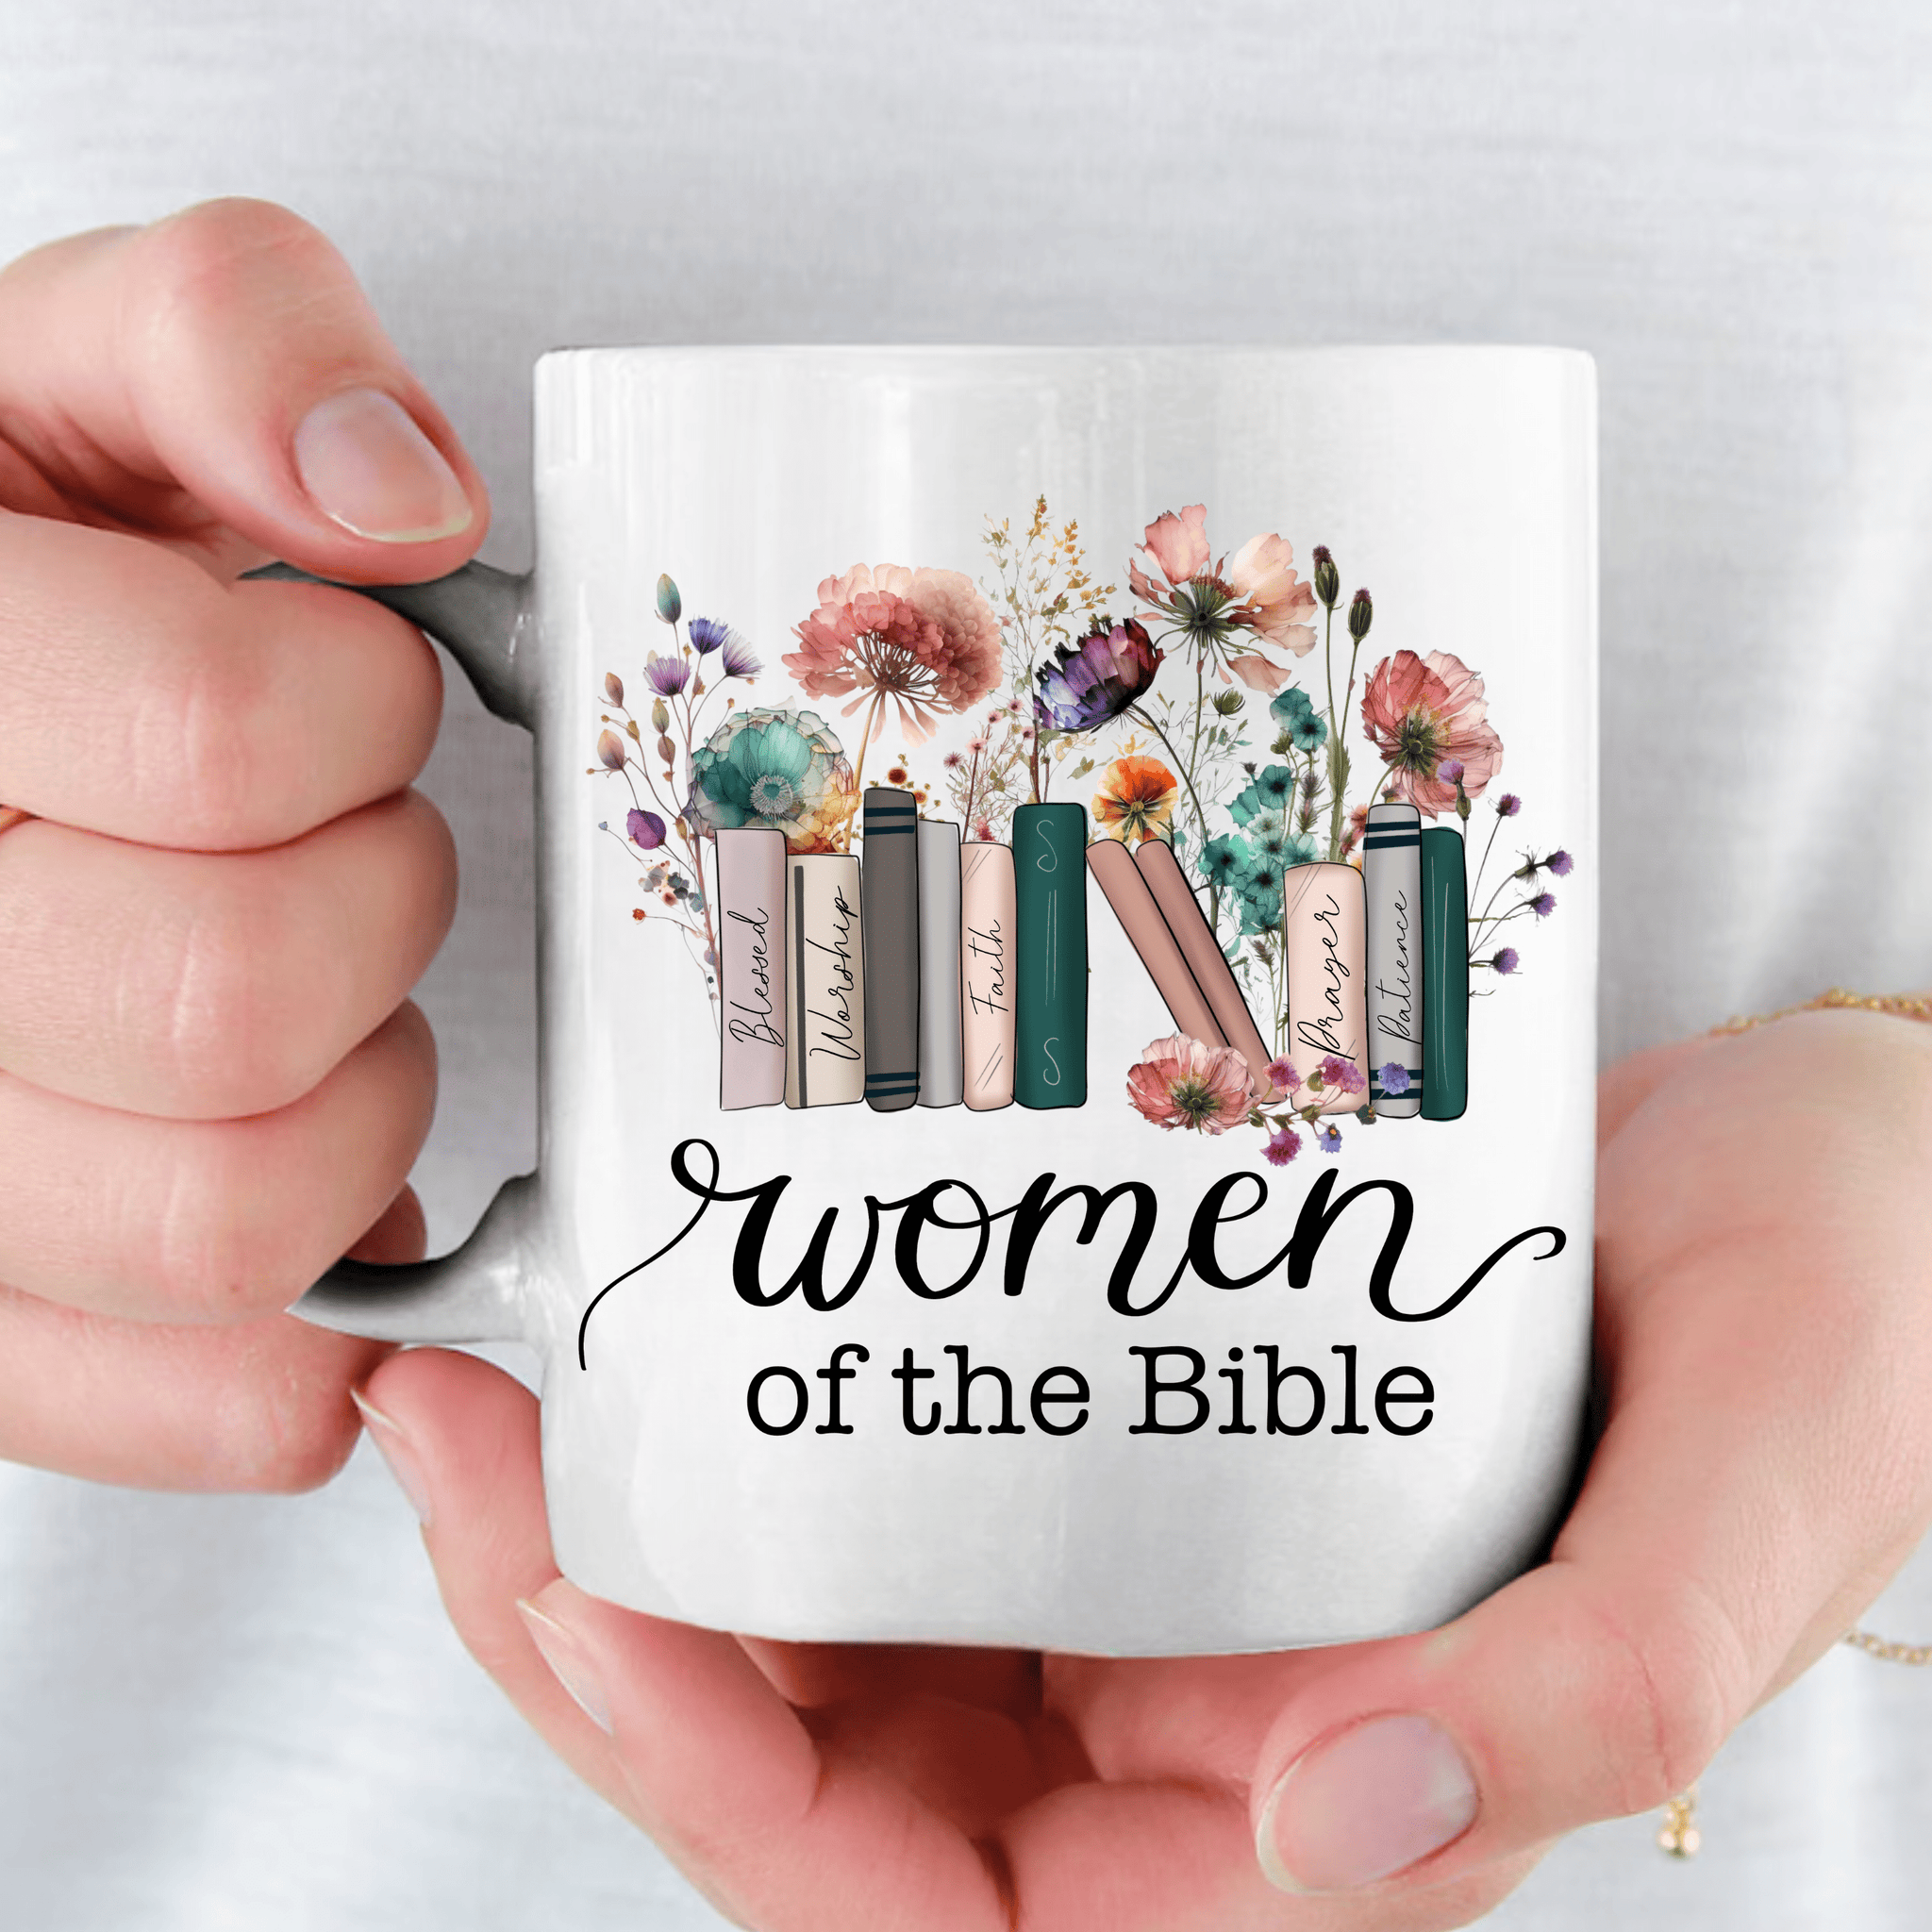 Women of the Bible White 15oz  Mug